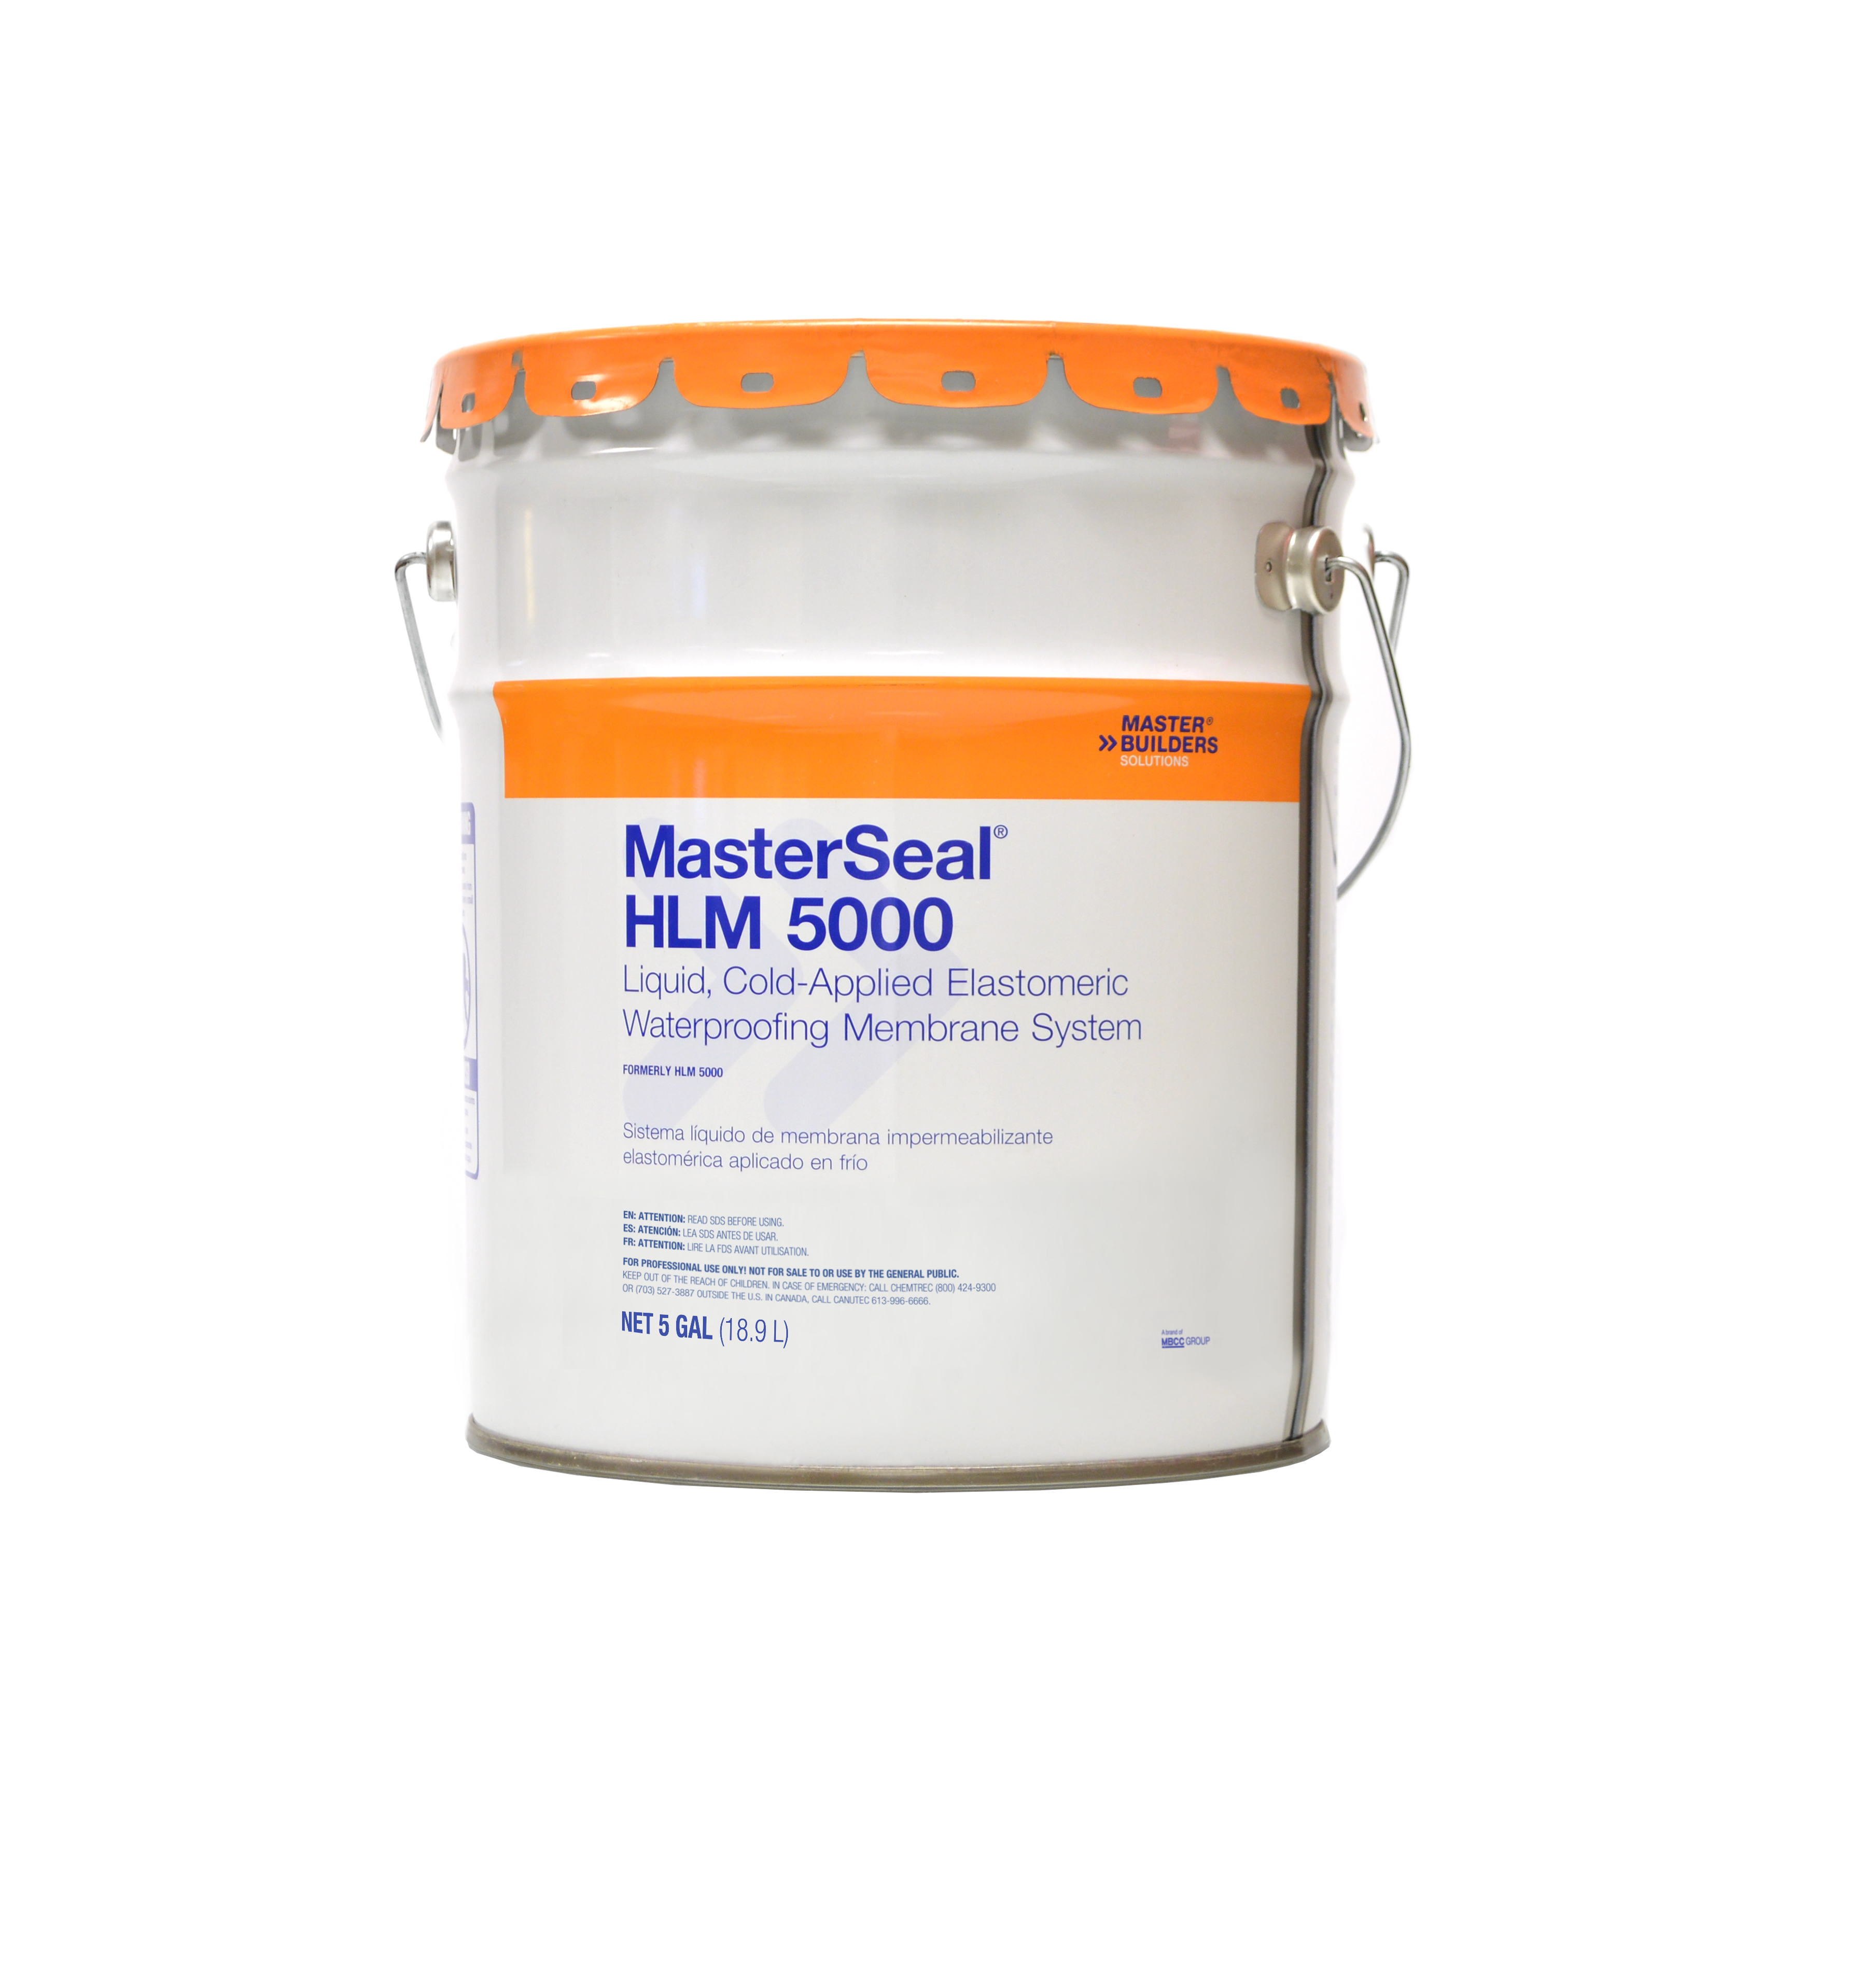 MASTERSEAL HLM 5000 ROLLER GRADE WATERPROOFING 5 GALLON LIQUID COLD-APPLIED ELASTOMERIC MEMBRANE SYSTEM